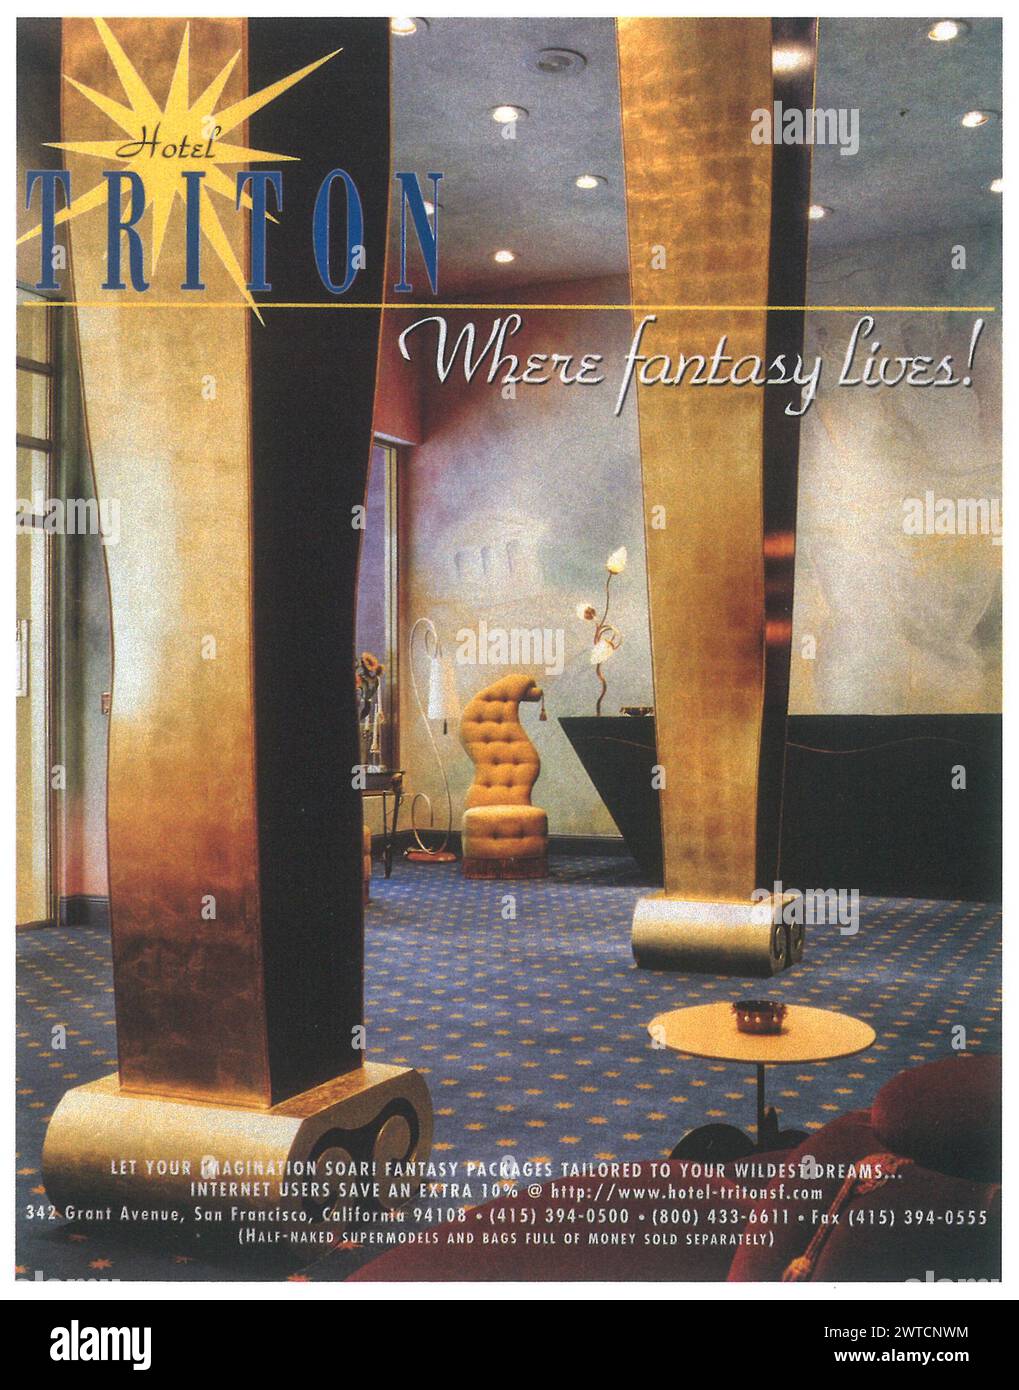 1996 Hotel Triton San Francisco California ad Stock Photo